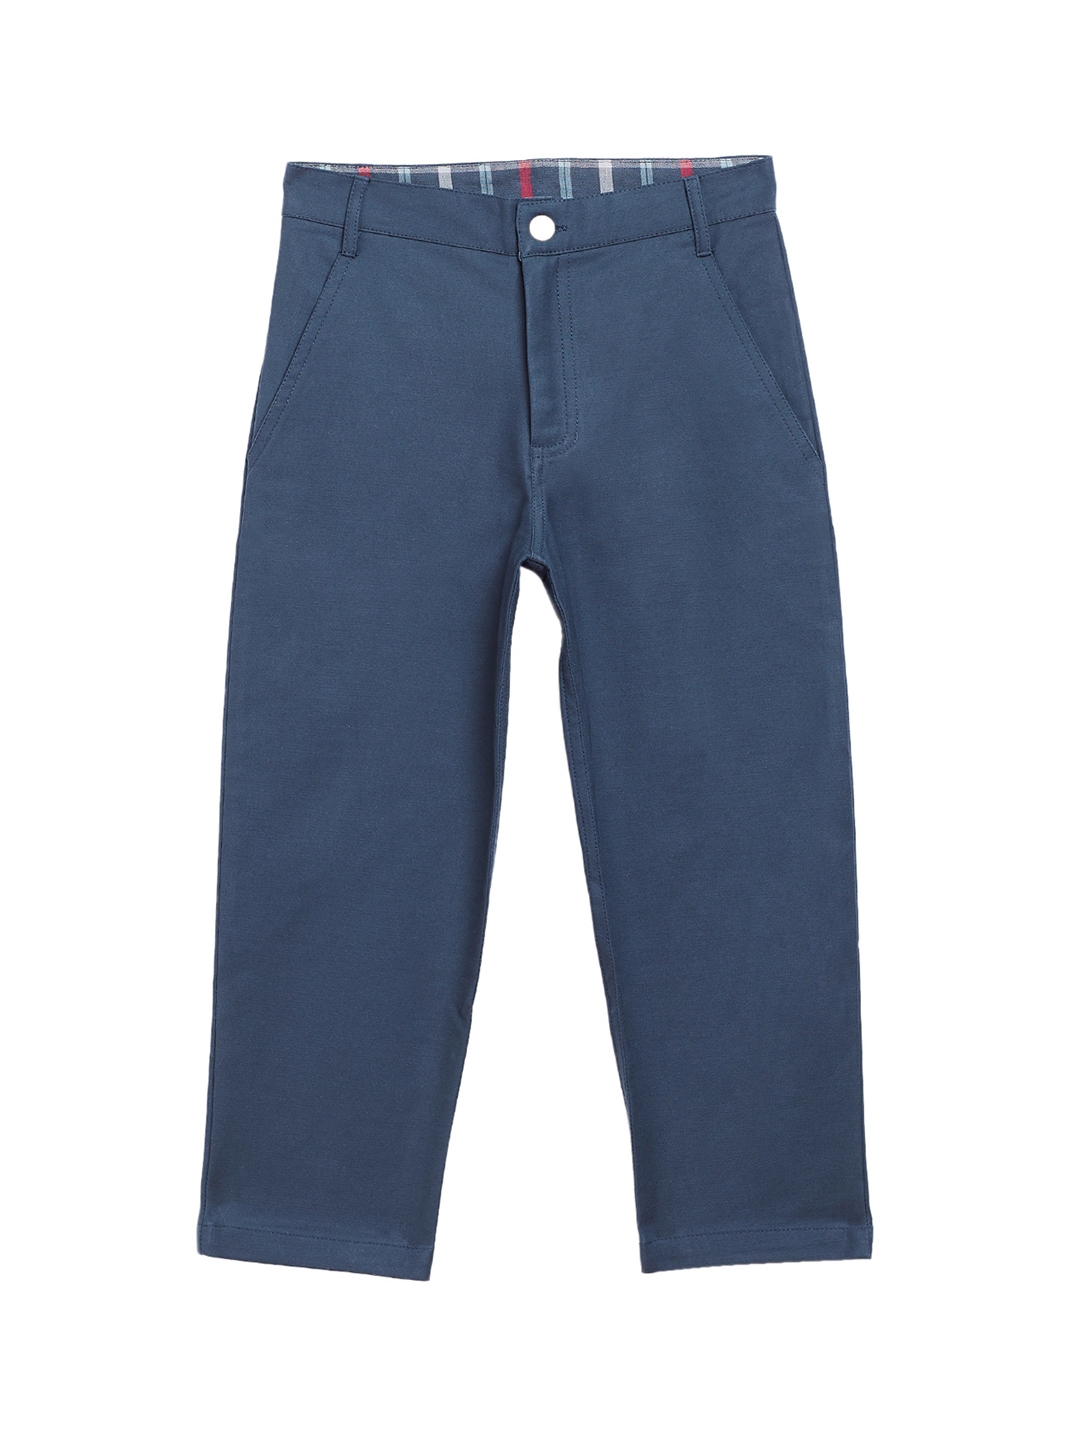 Buy KIDKLO Boys Navy Blue Slim Fit Solid Regular Trousers - Trousers ...